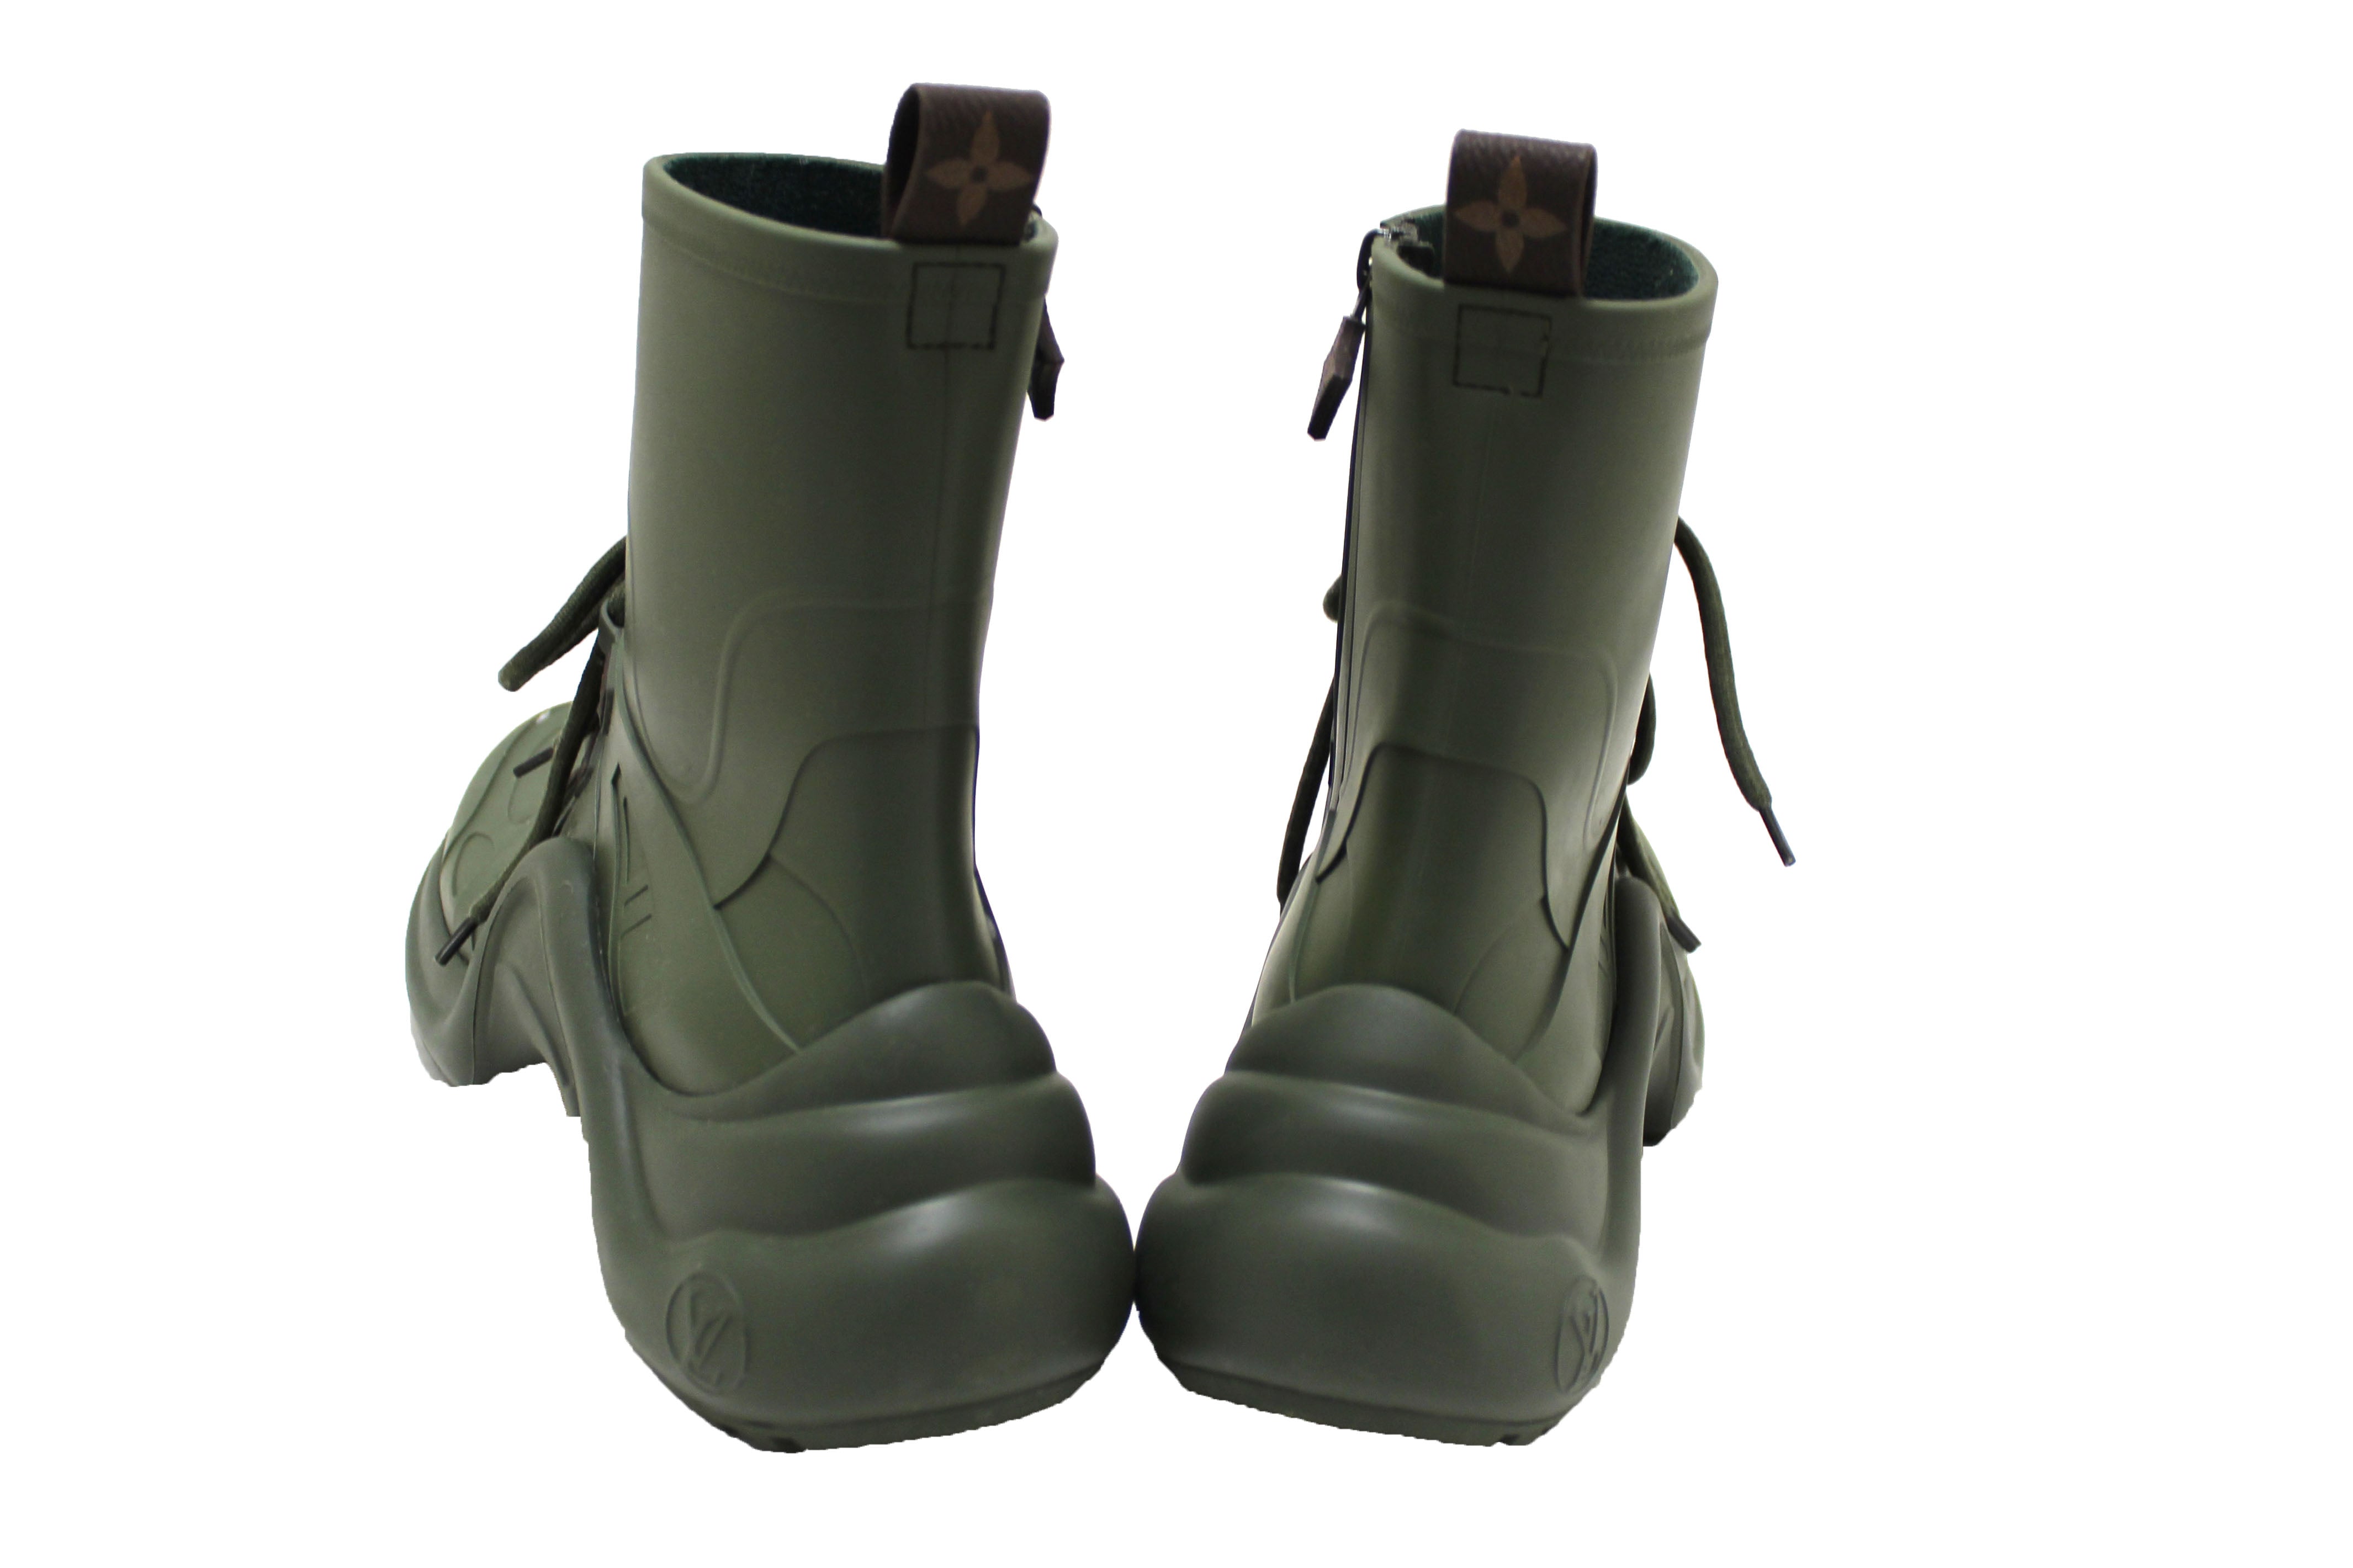 LOUIS VUITTON (WMNS) LV Archlight Rain Boots Green Athletic Shoes 1A67BE